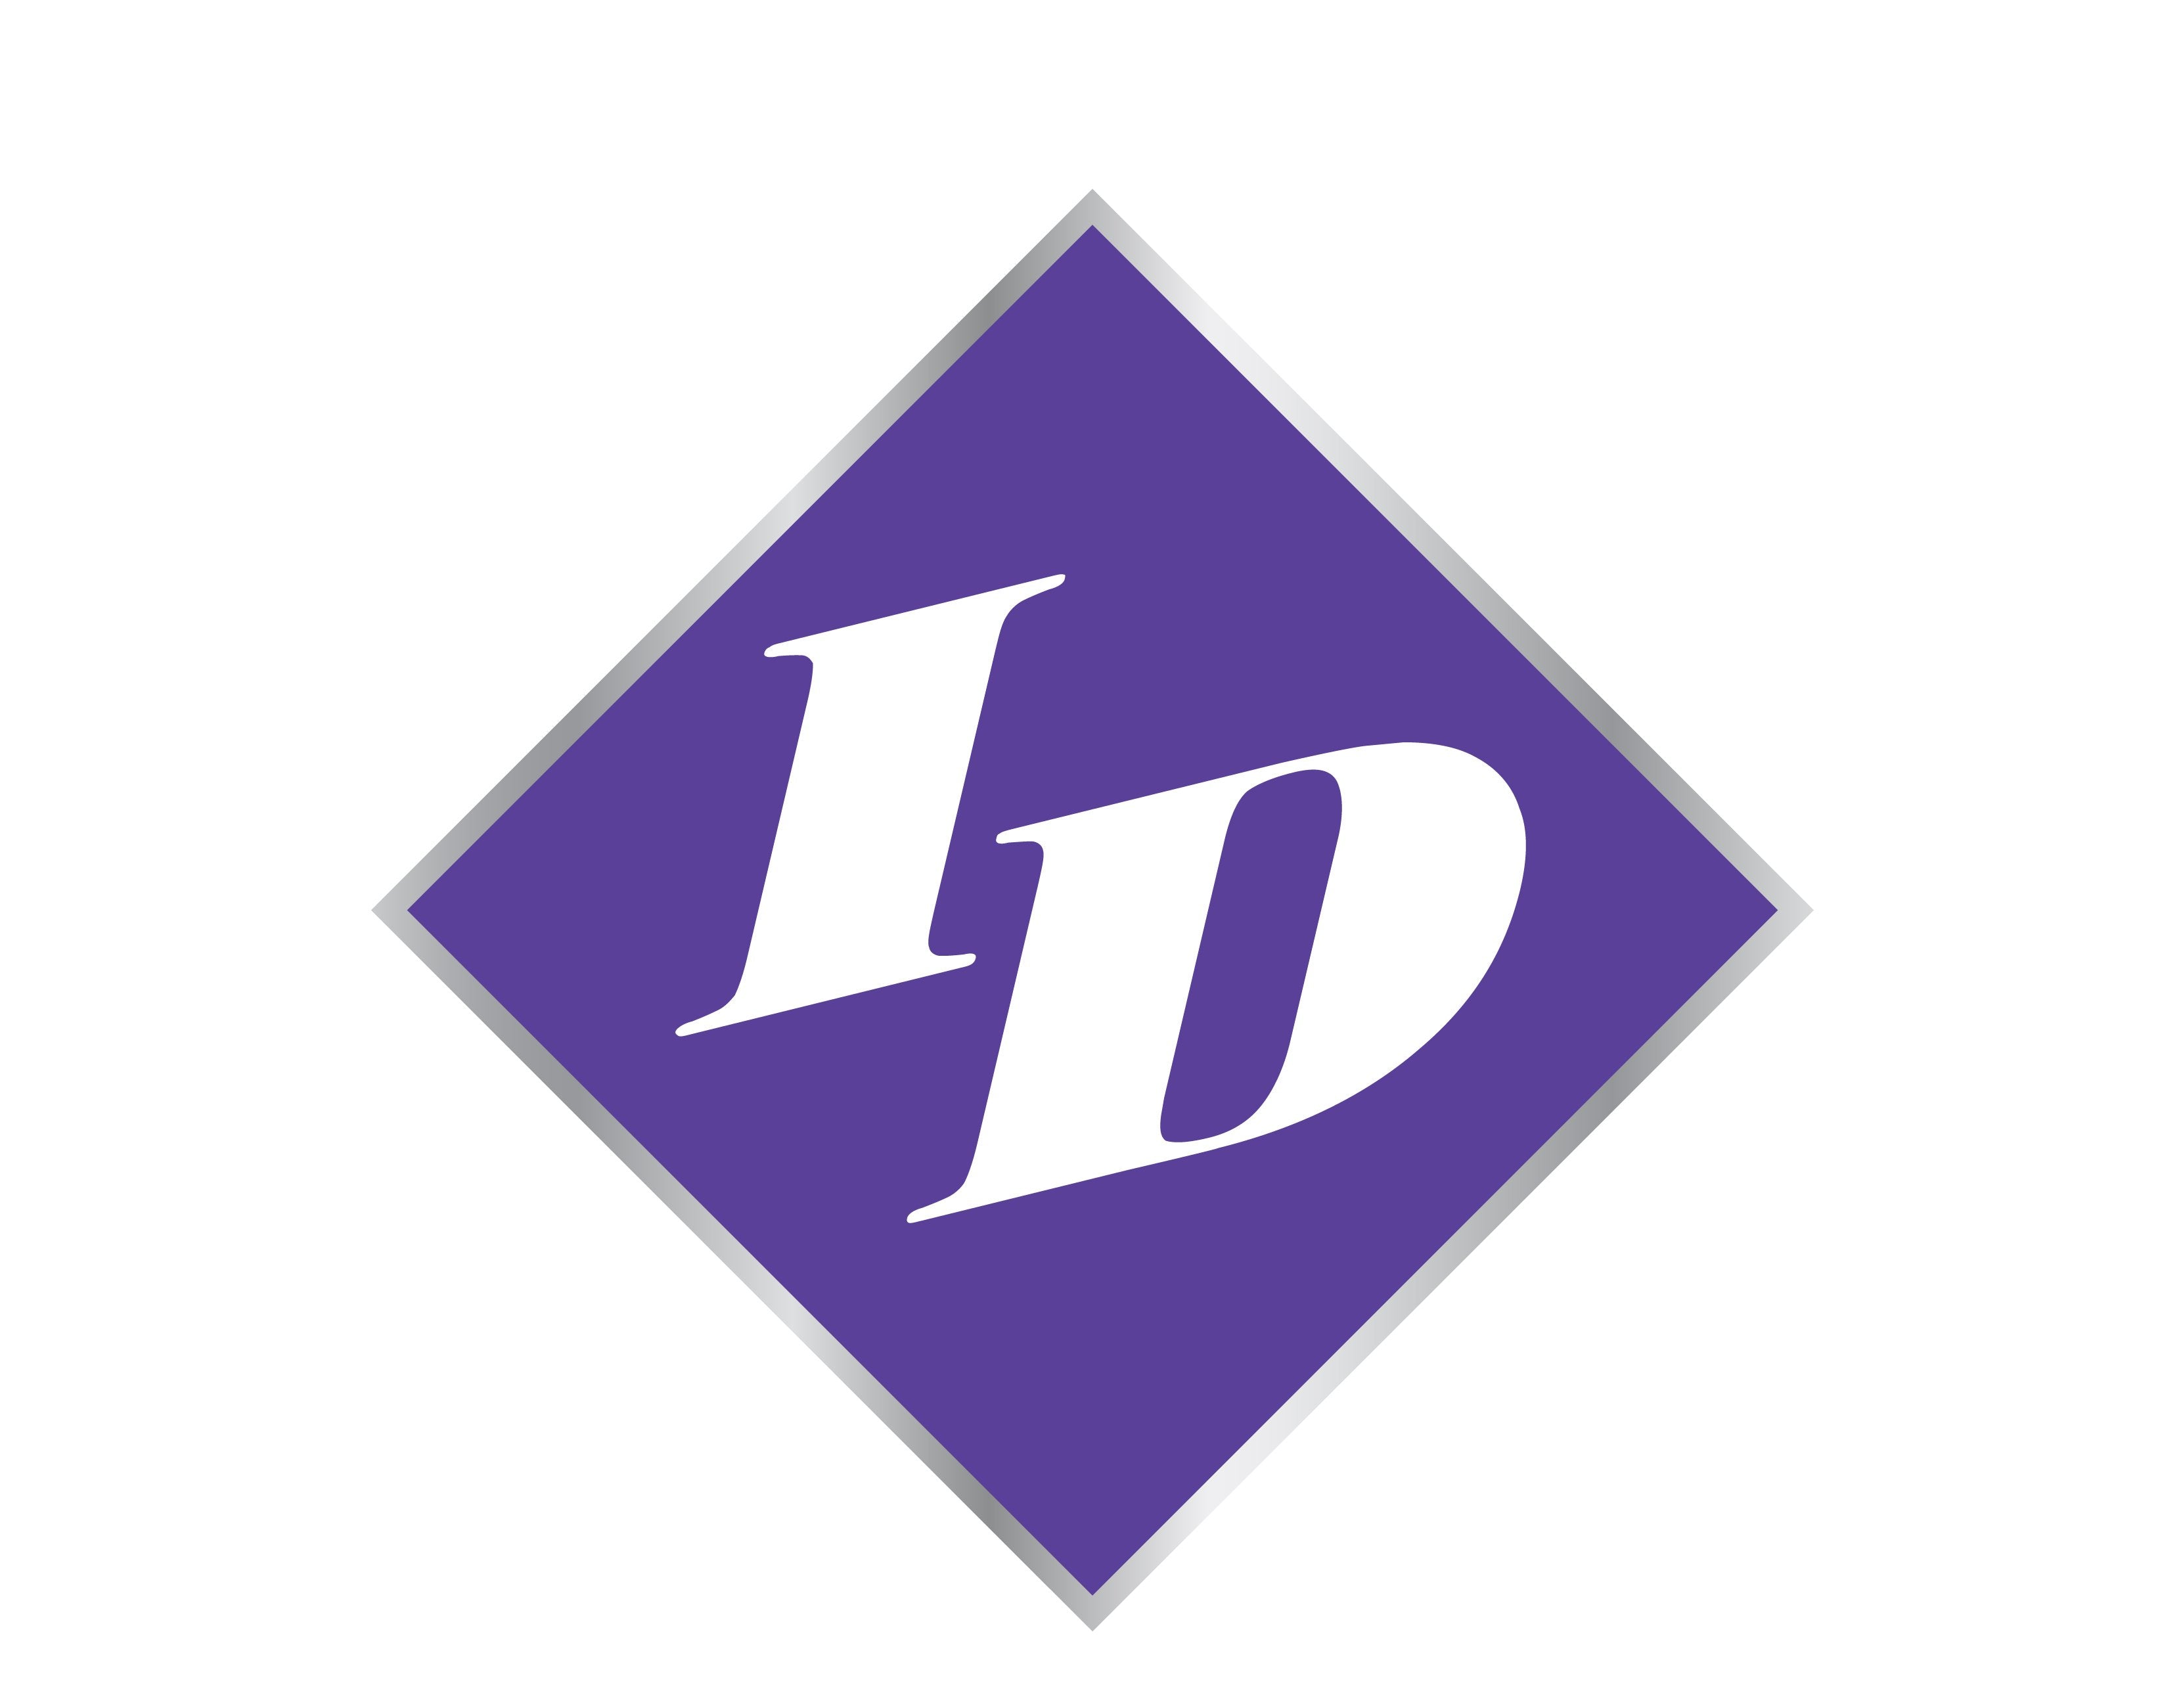 ID Lubricants